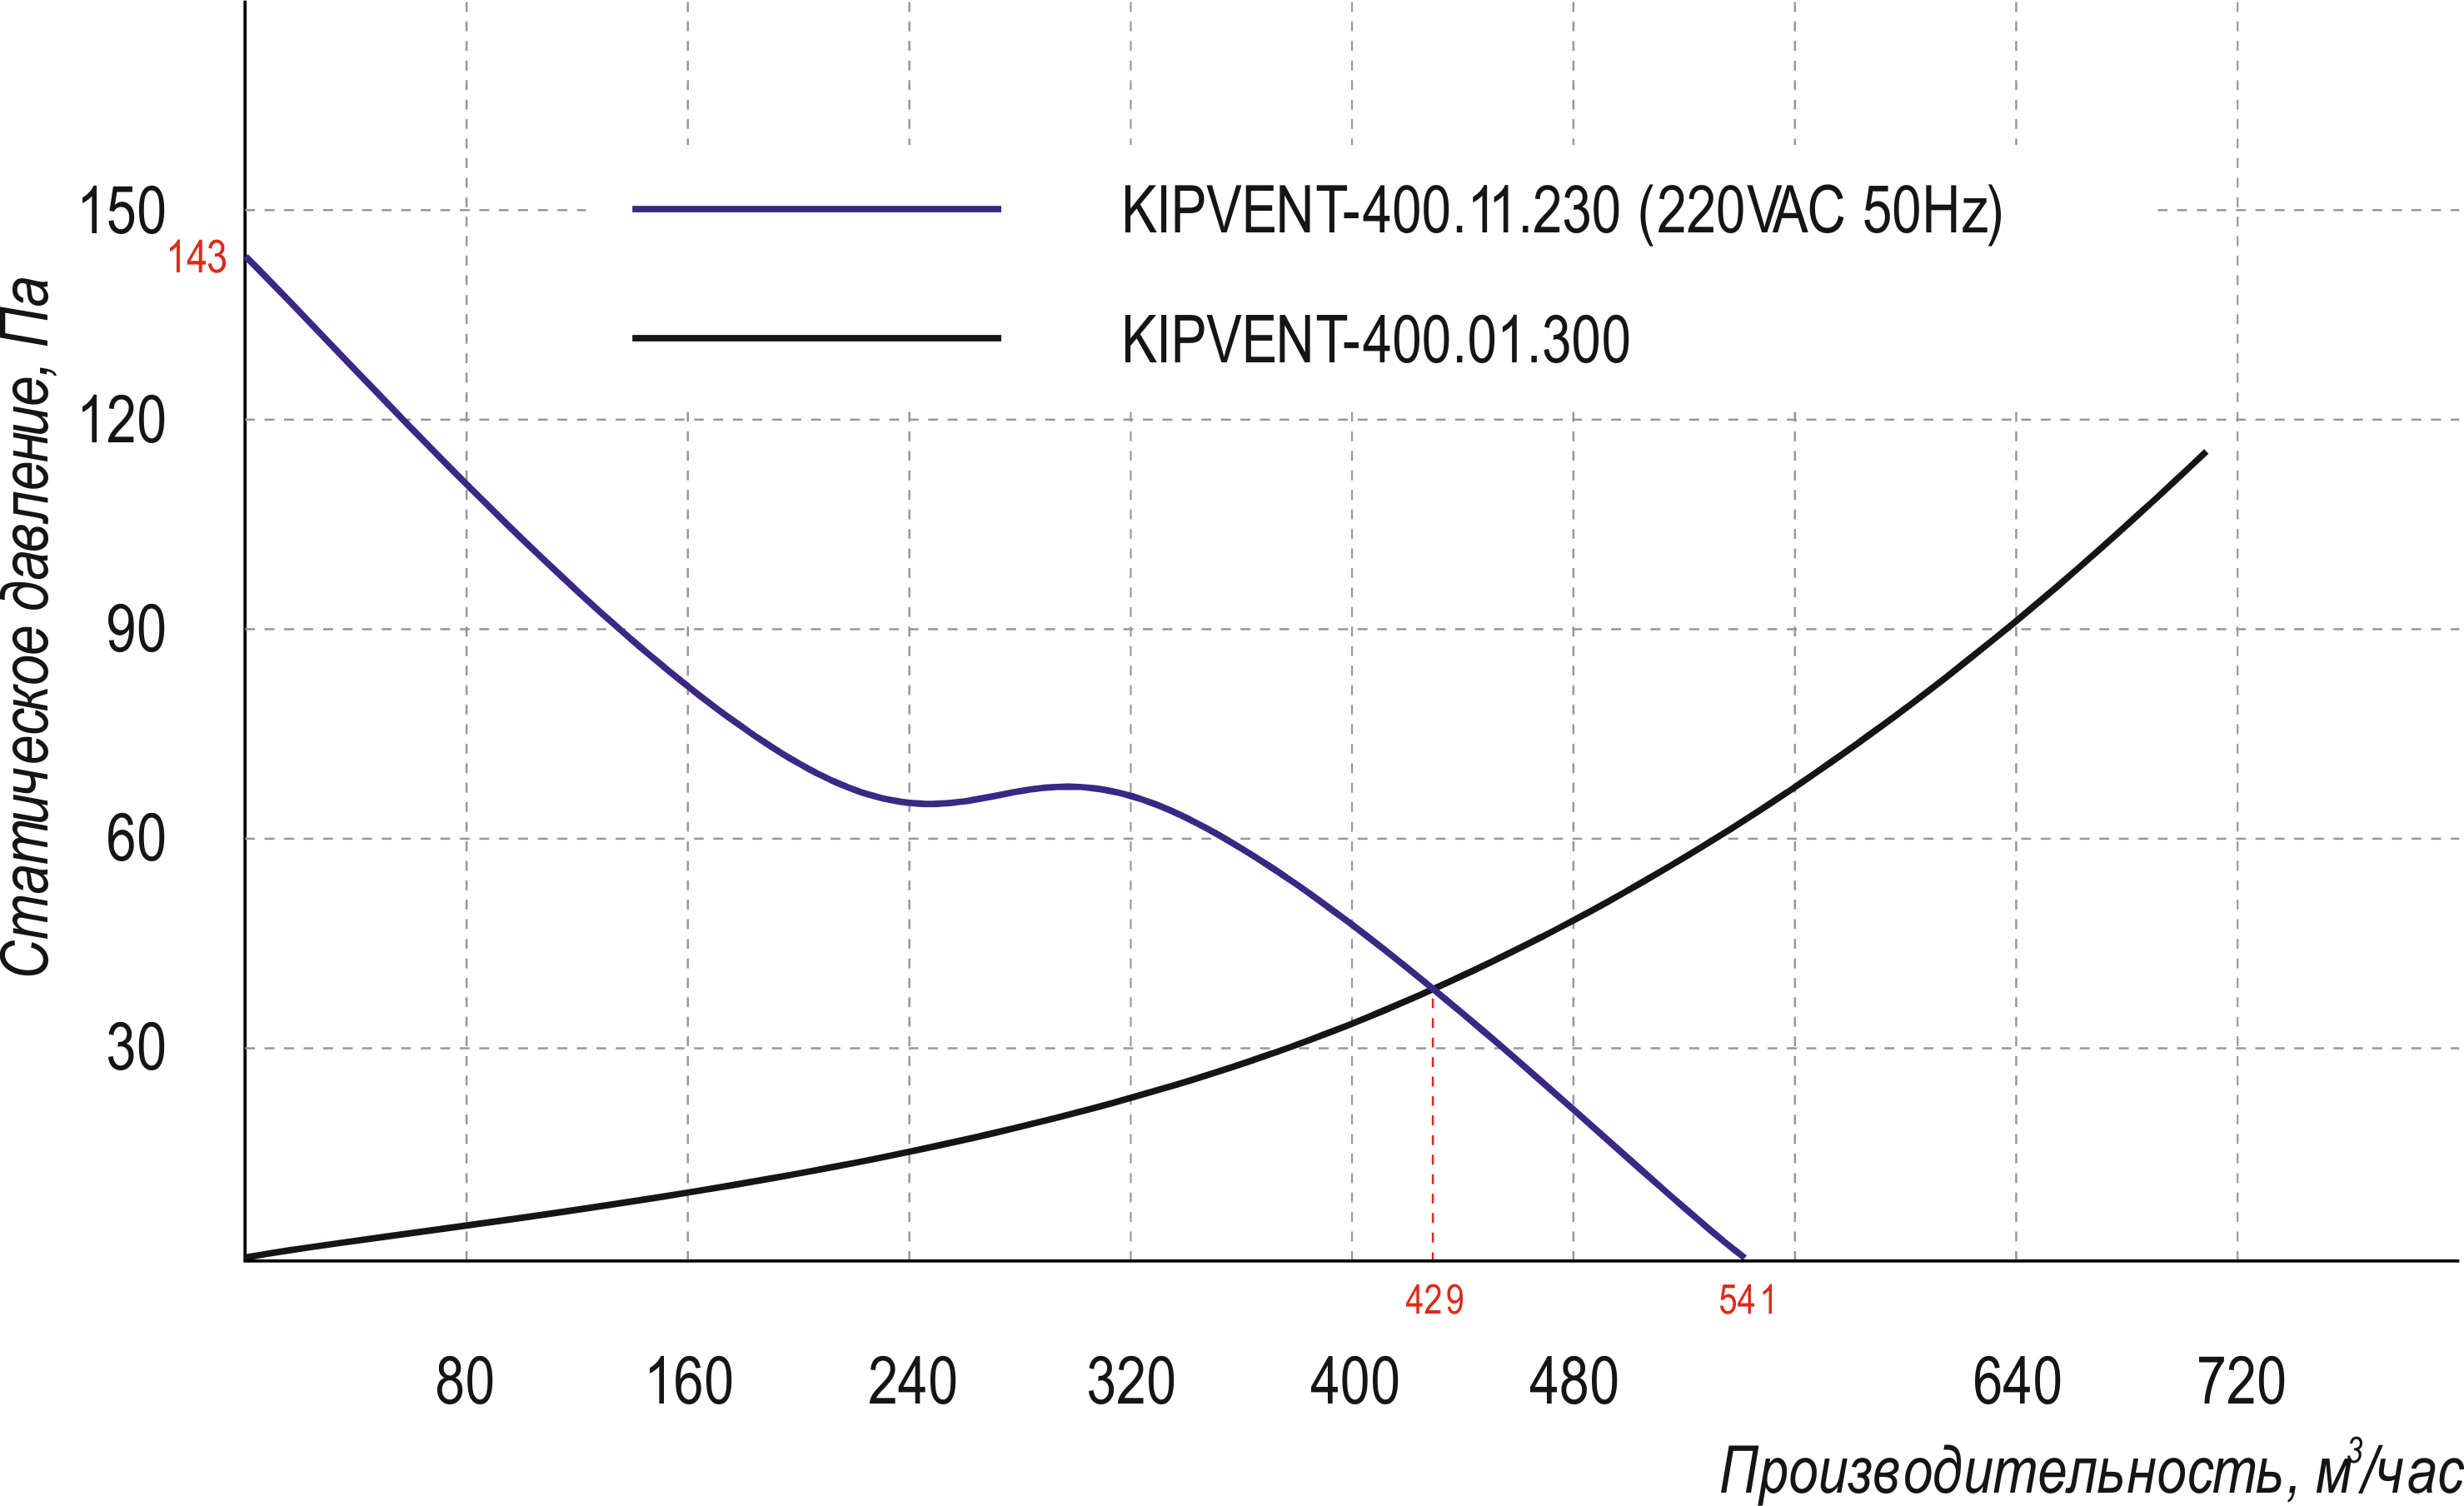 Характеристики вентиляторов в координатах «давление/расход»: KIPVENT-200.11.230